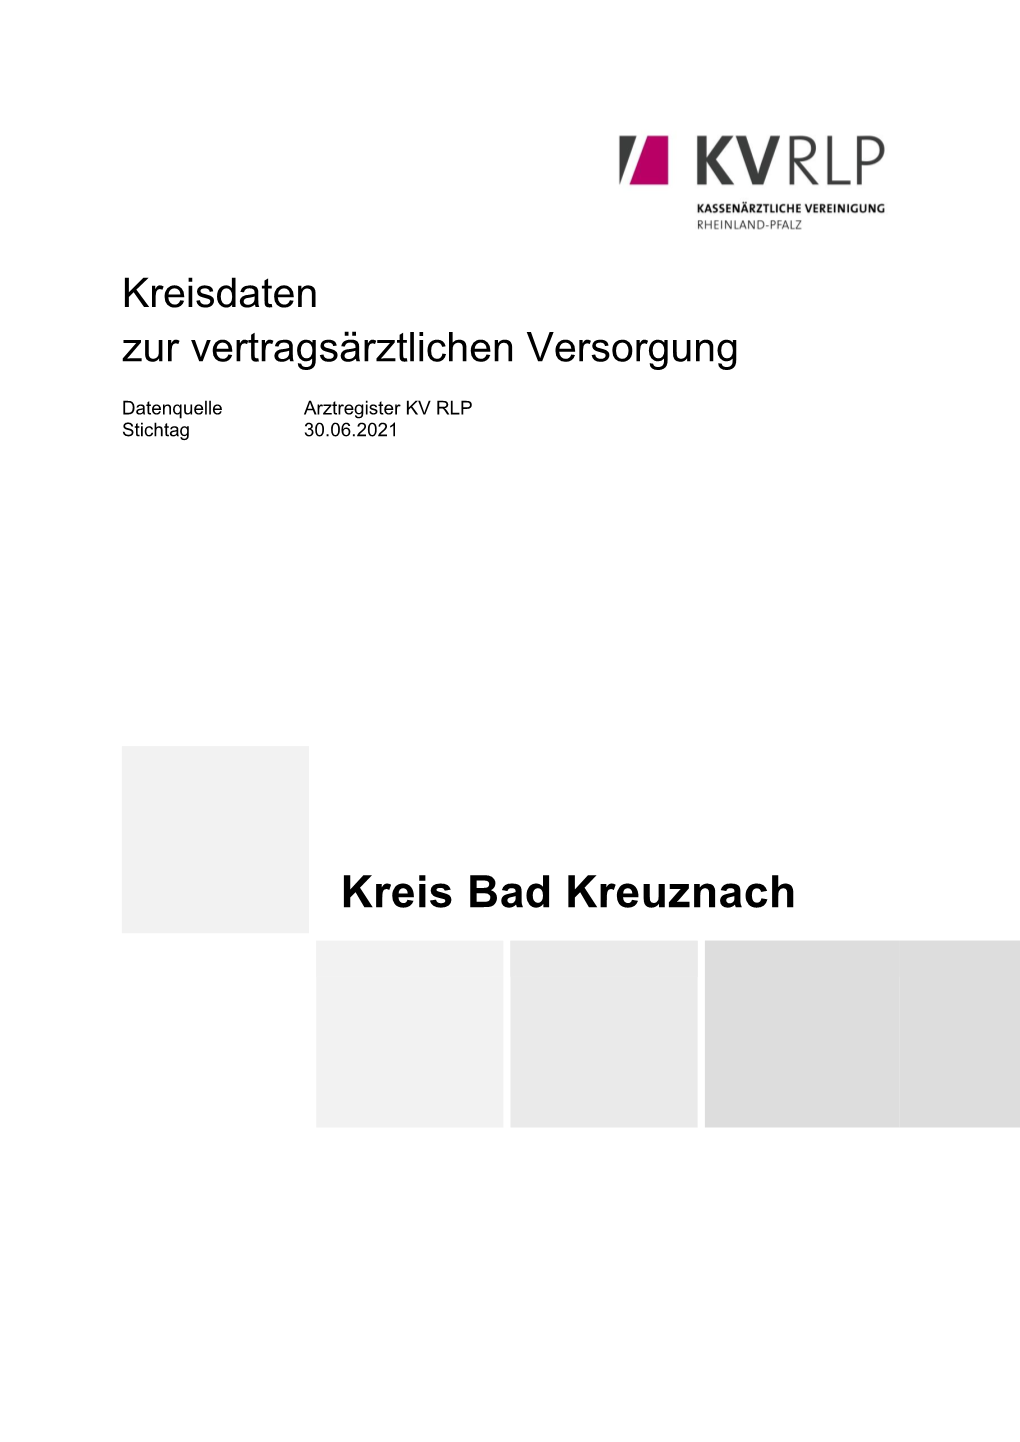 Kreis Bad Kreuznach